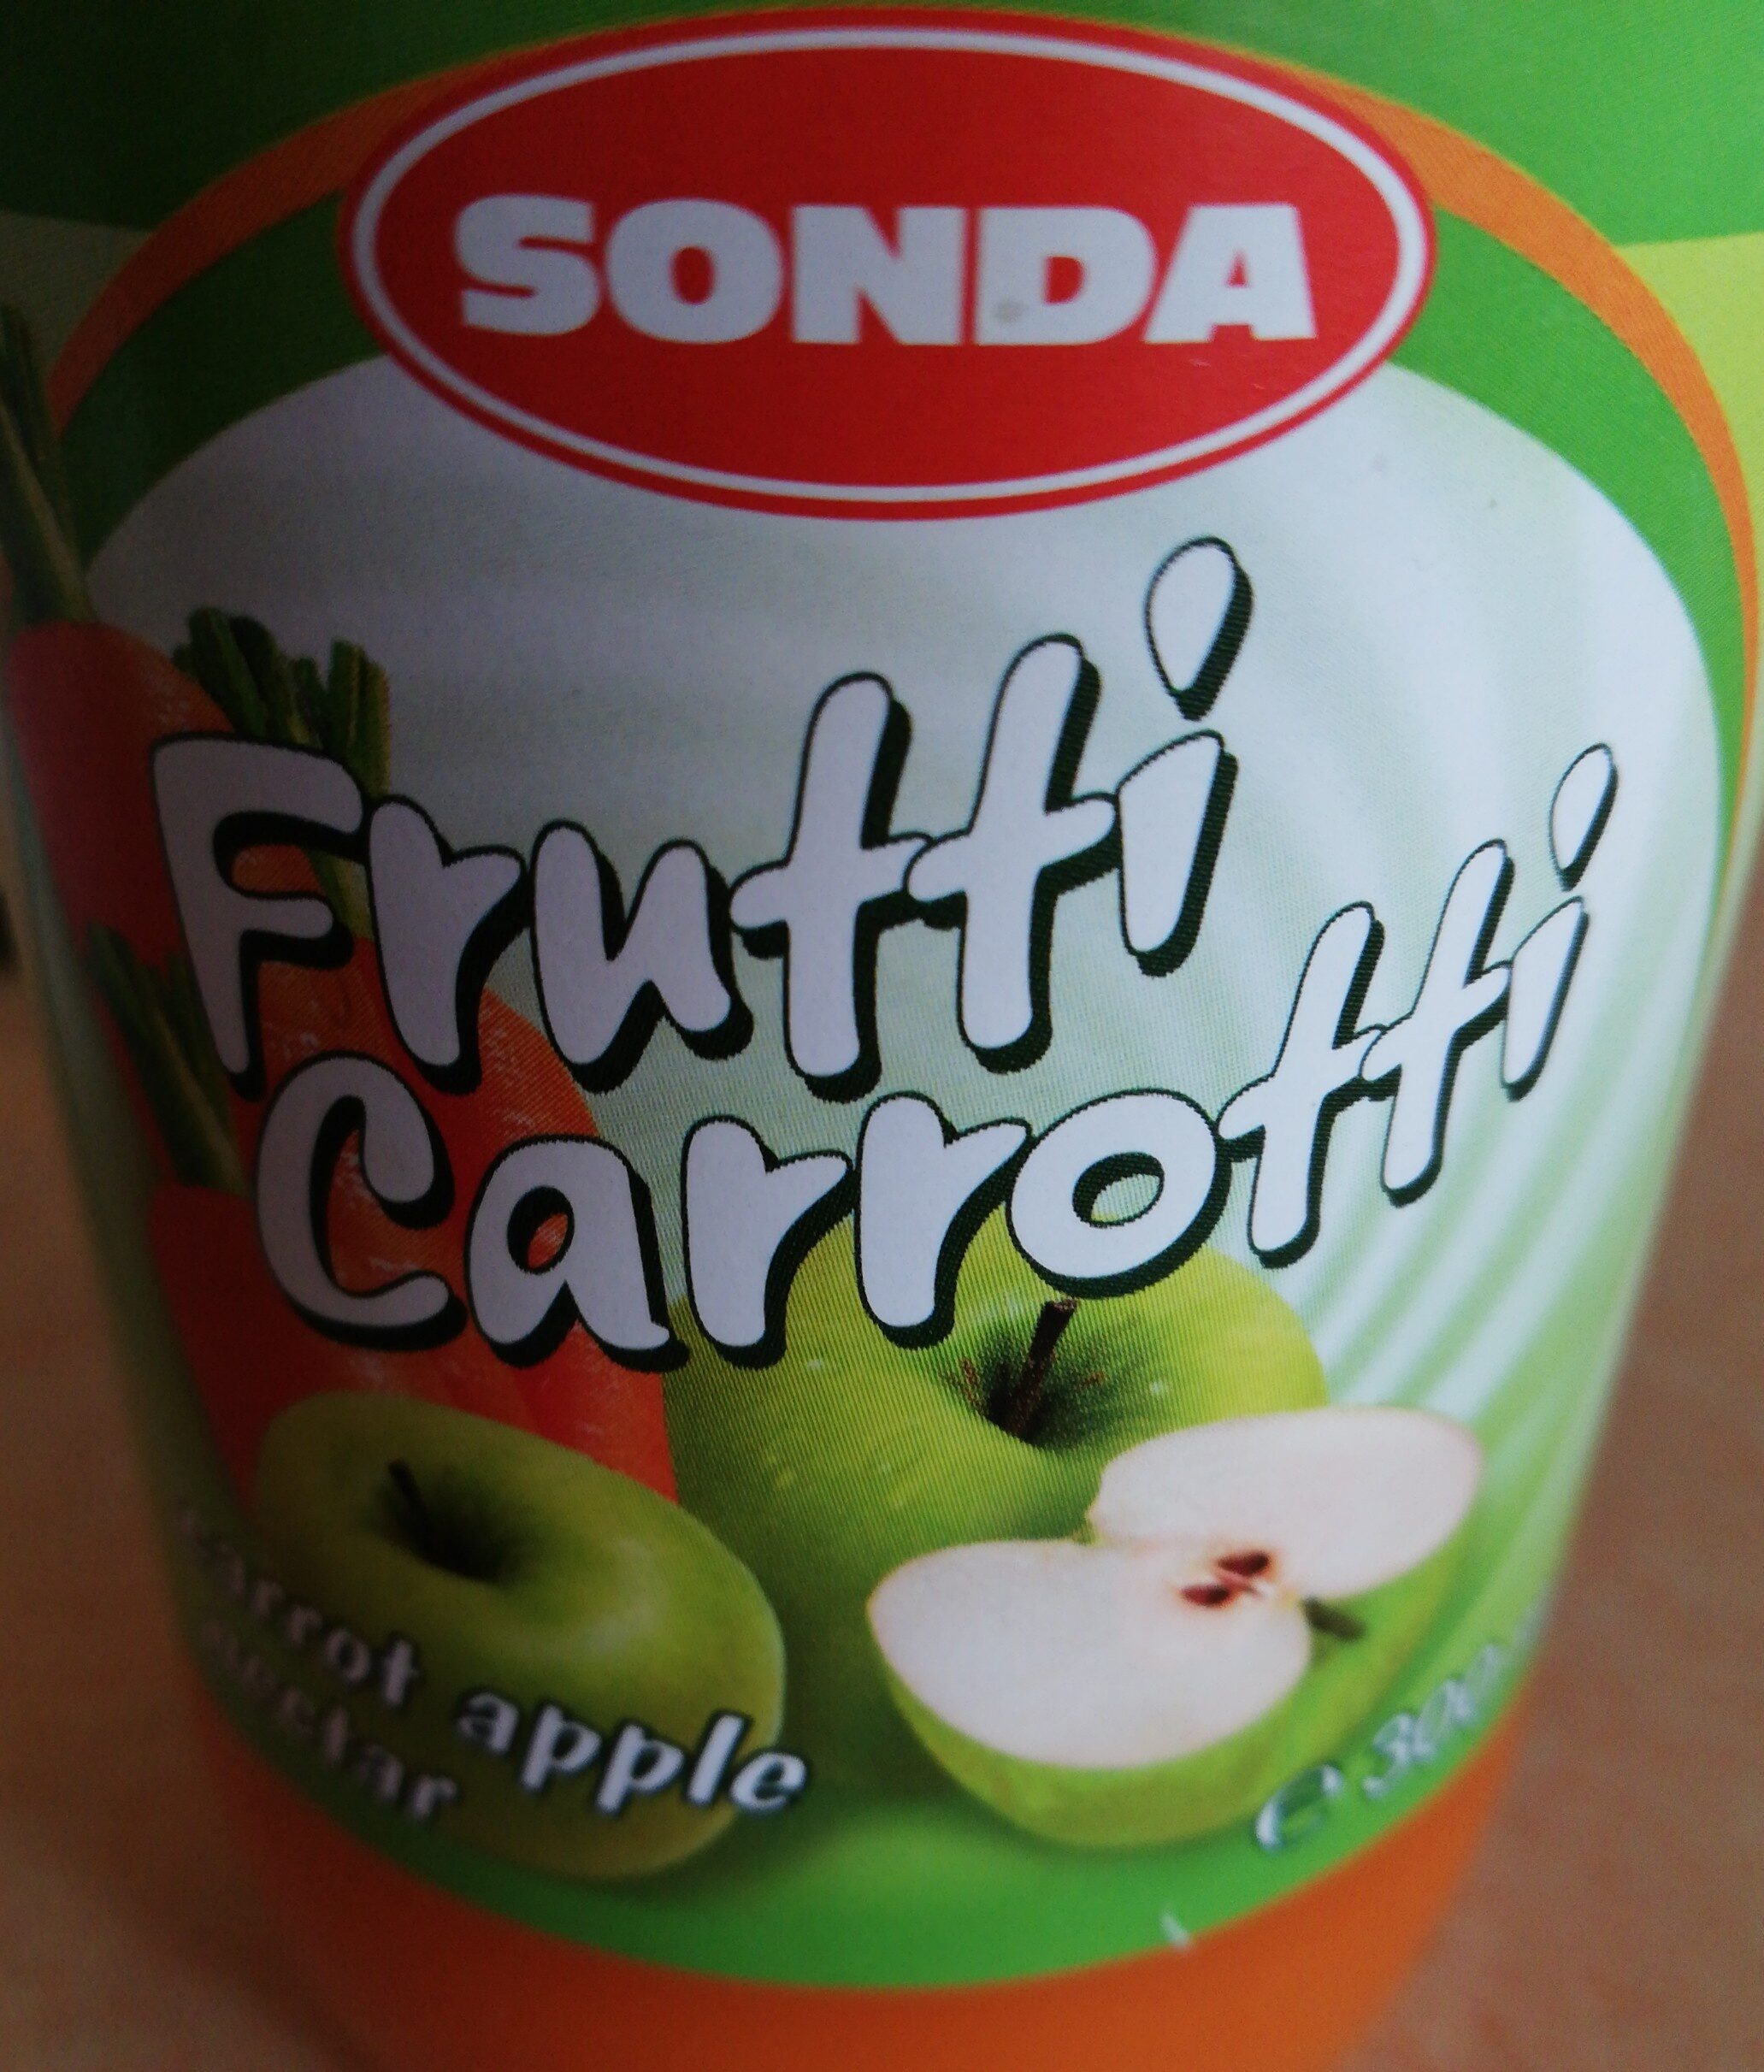 Frufti carrotti - Съставки - en